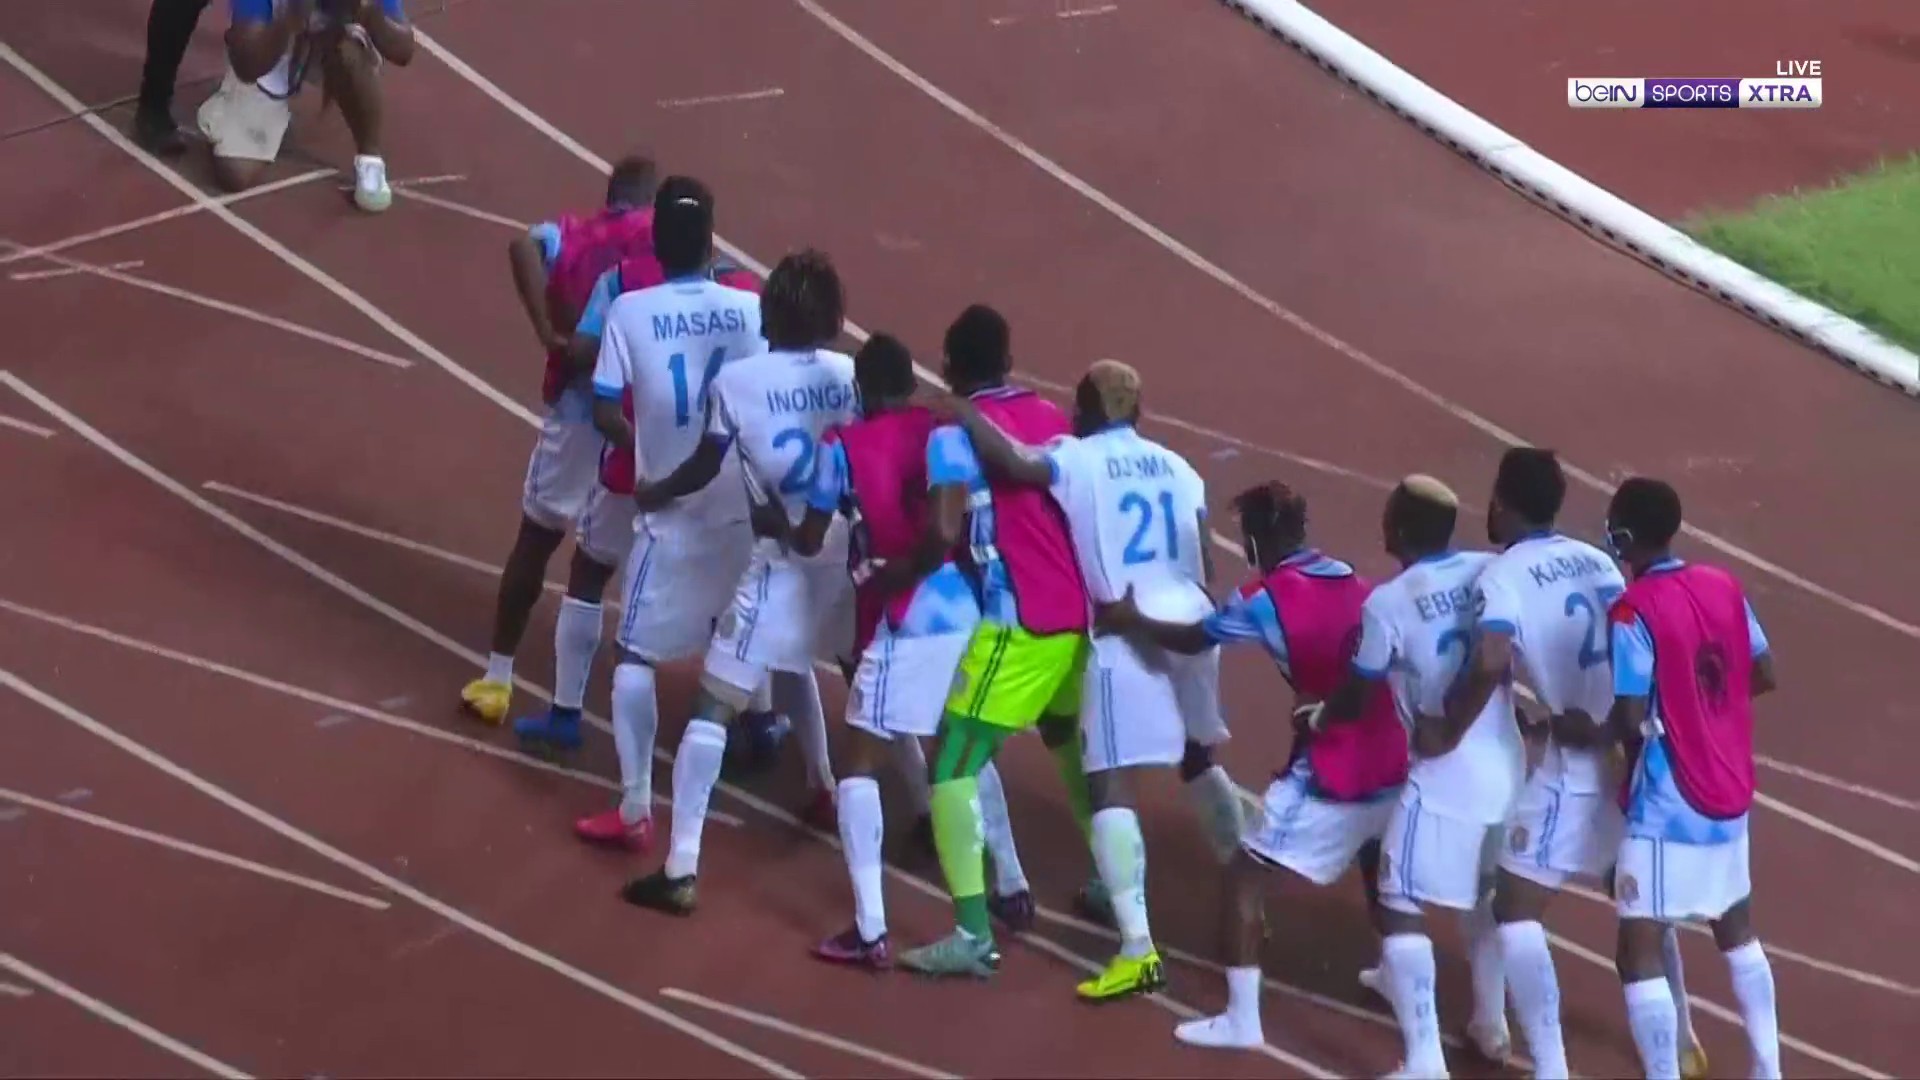 Libya 1-1 DR Congo: GOAL Masasi